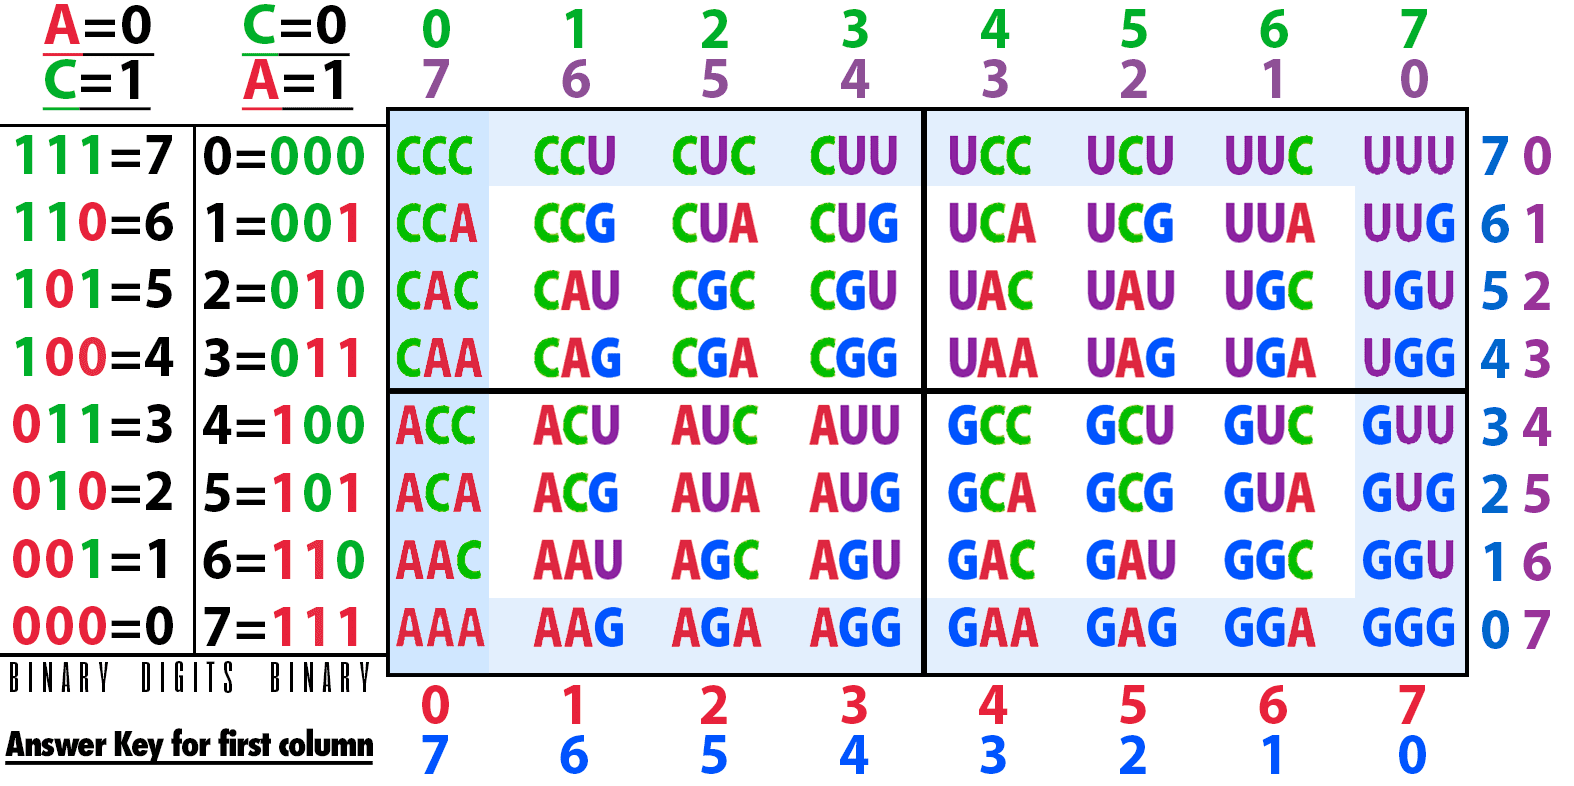 9-RNA-puzzle